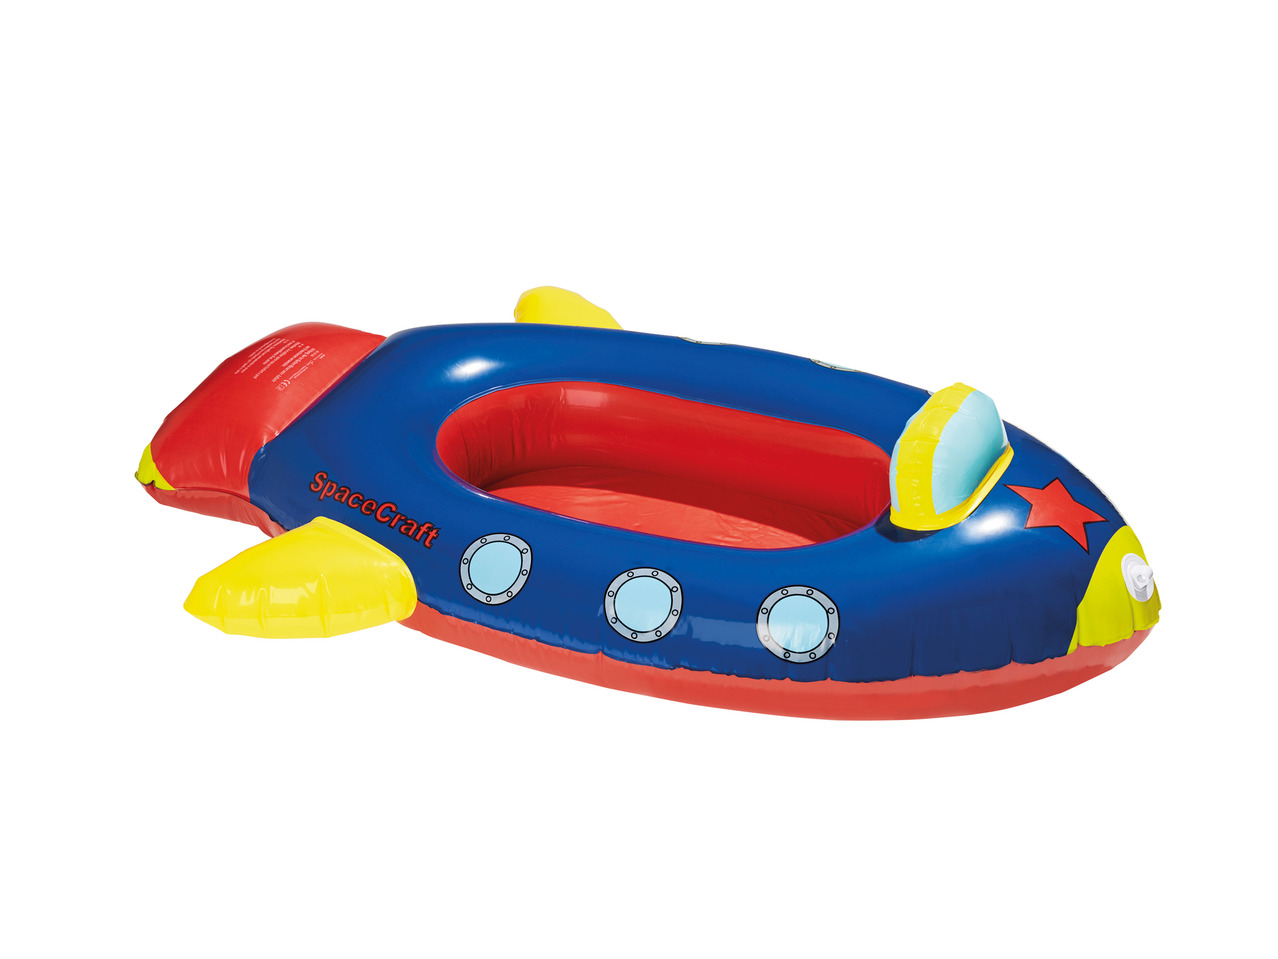 Playtive Junior Inflatable Boat, Aeroplane or Spaceship1